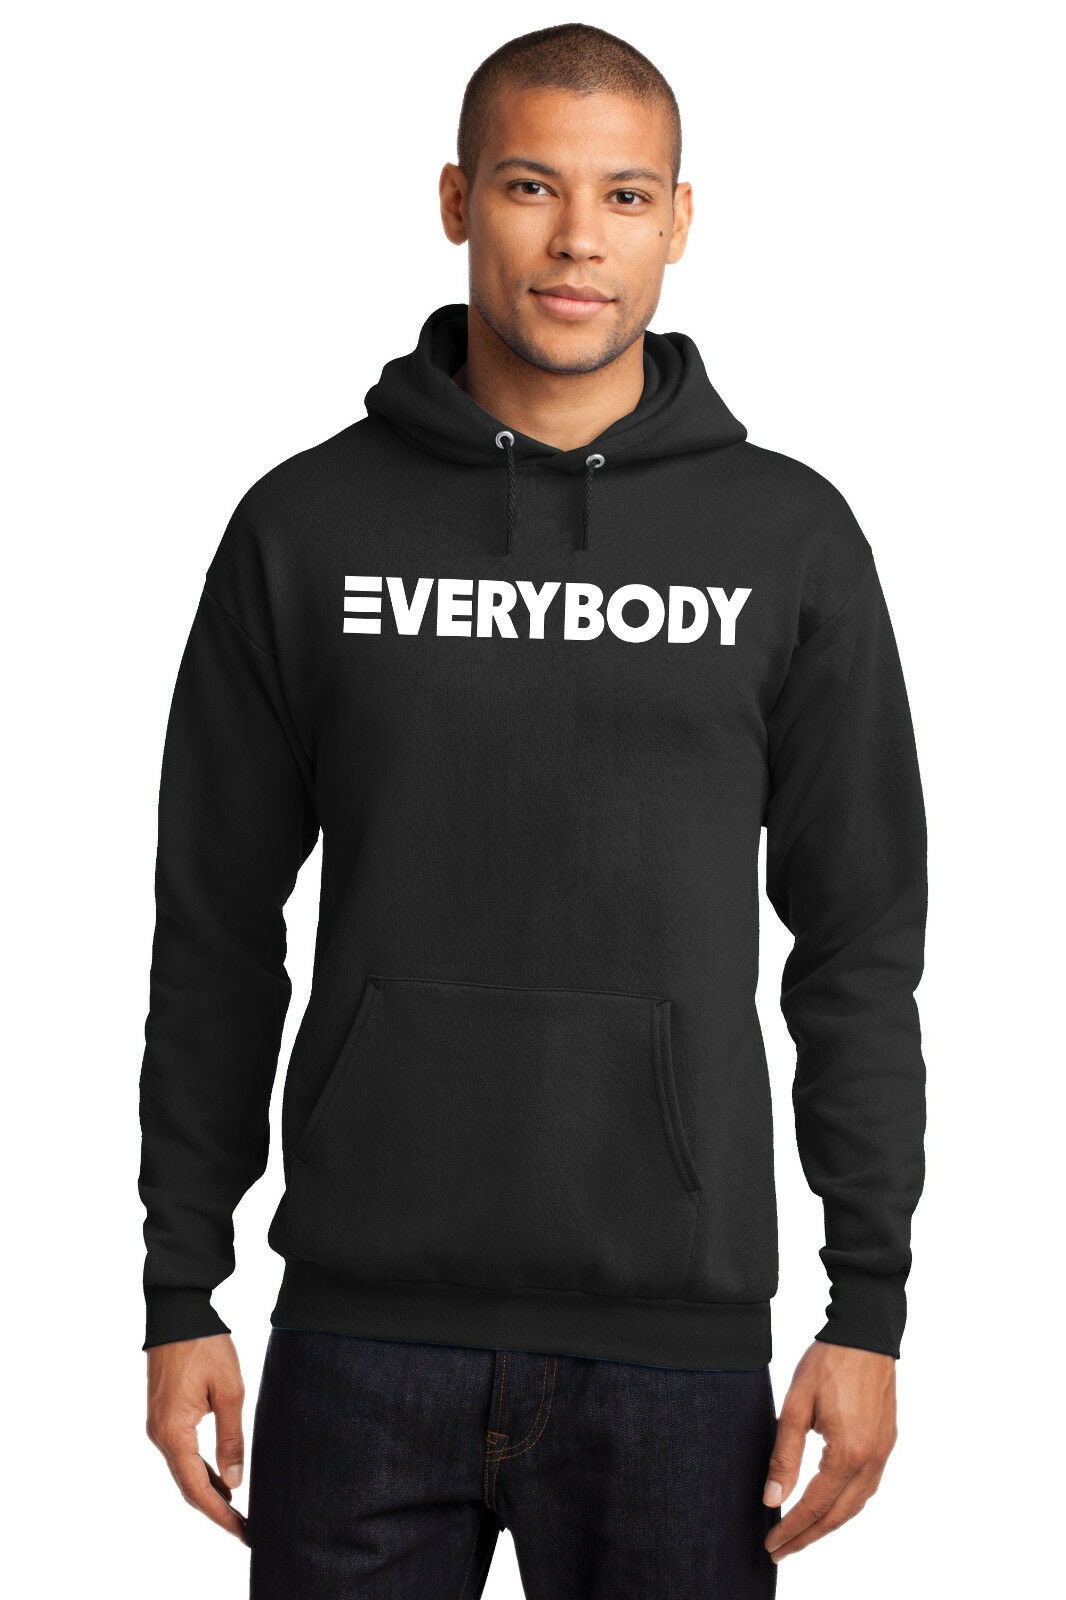 At deaktivere Absolut himmel Everybody Logic New Men's Hoodie Hooded Sweatshirt Black - Etsy